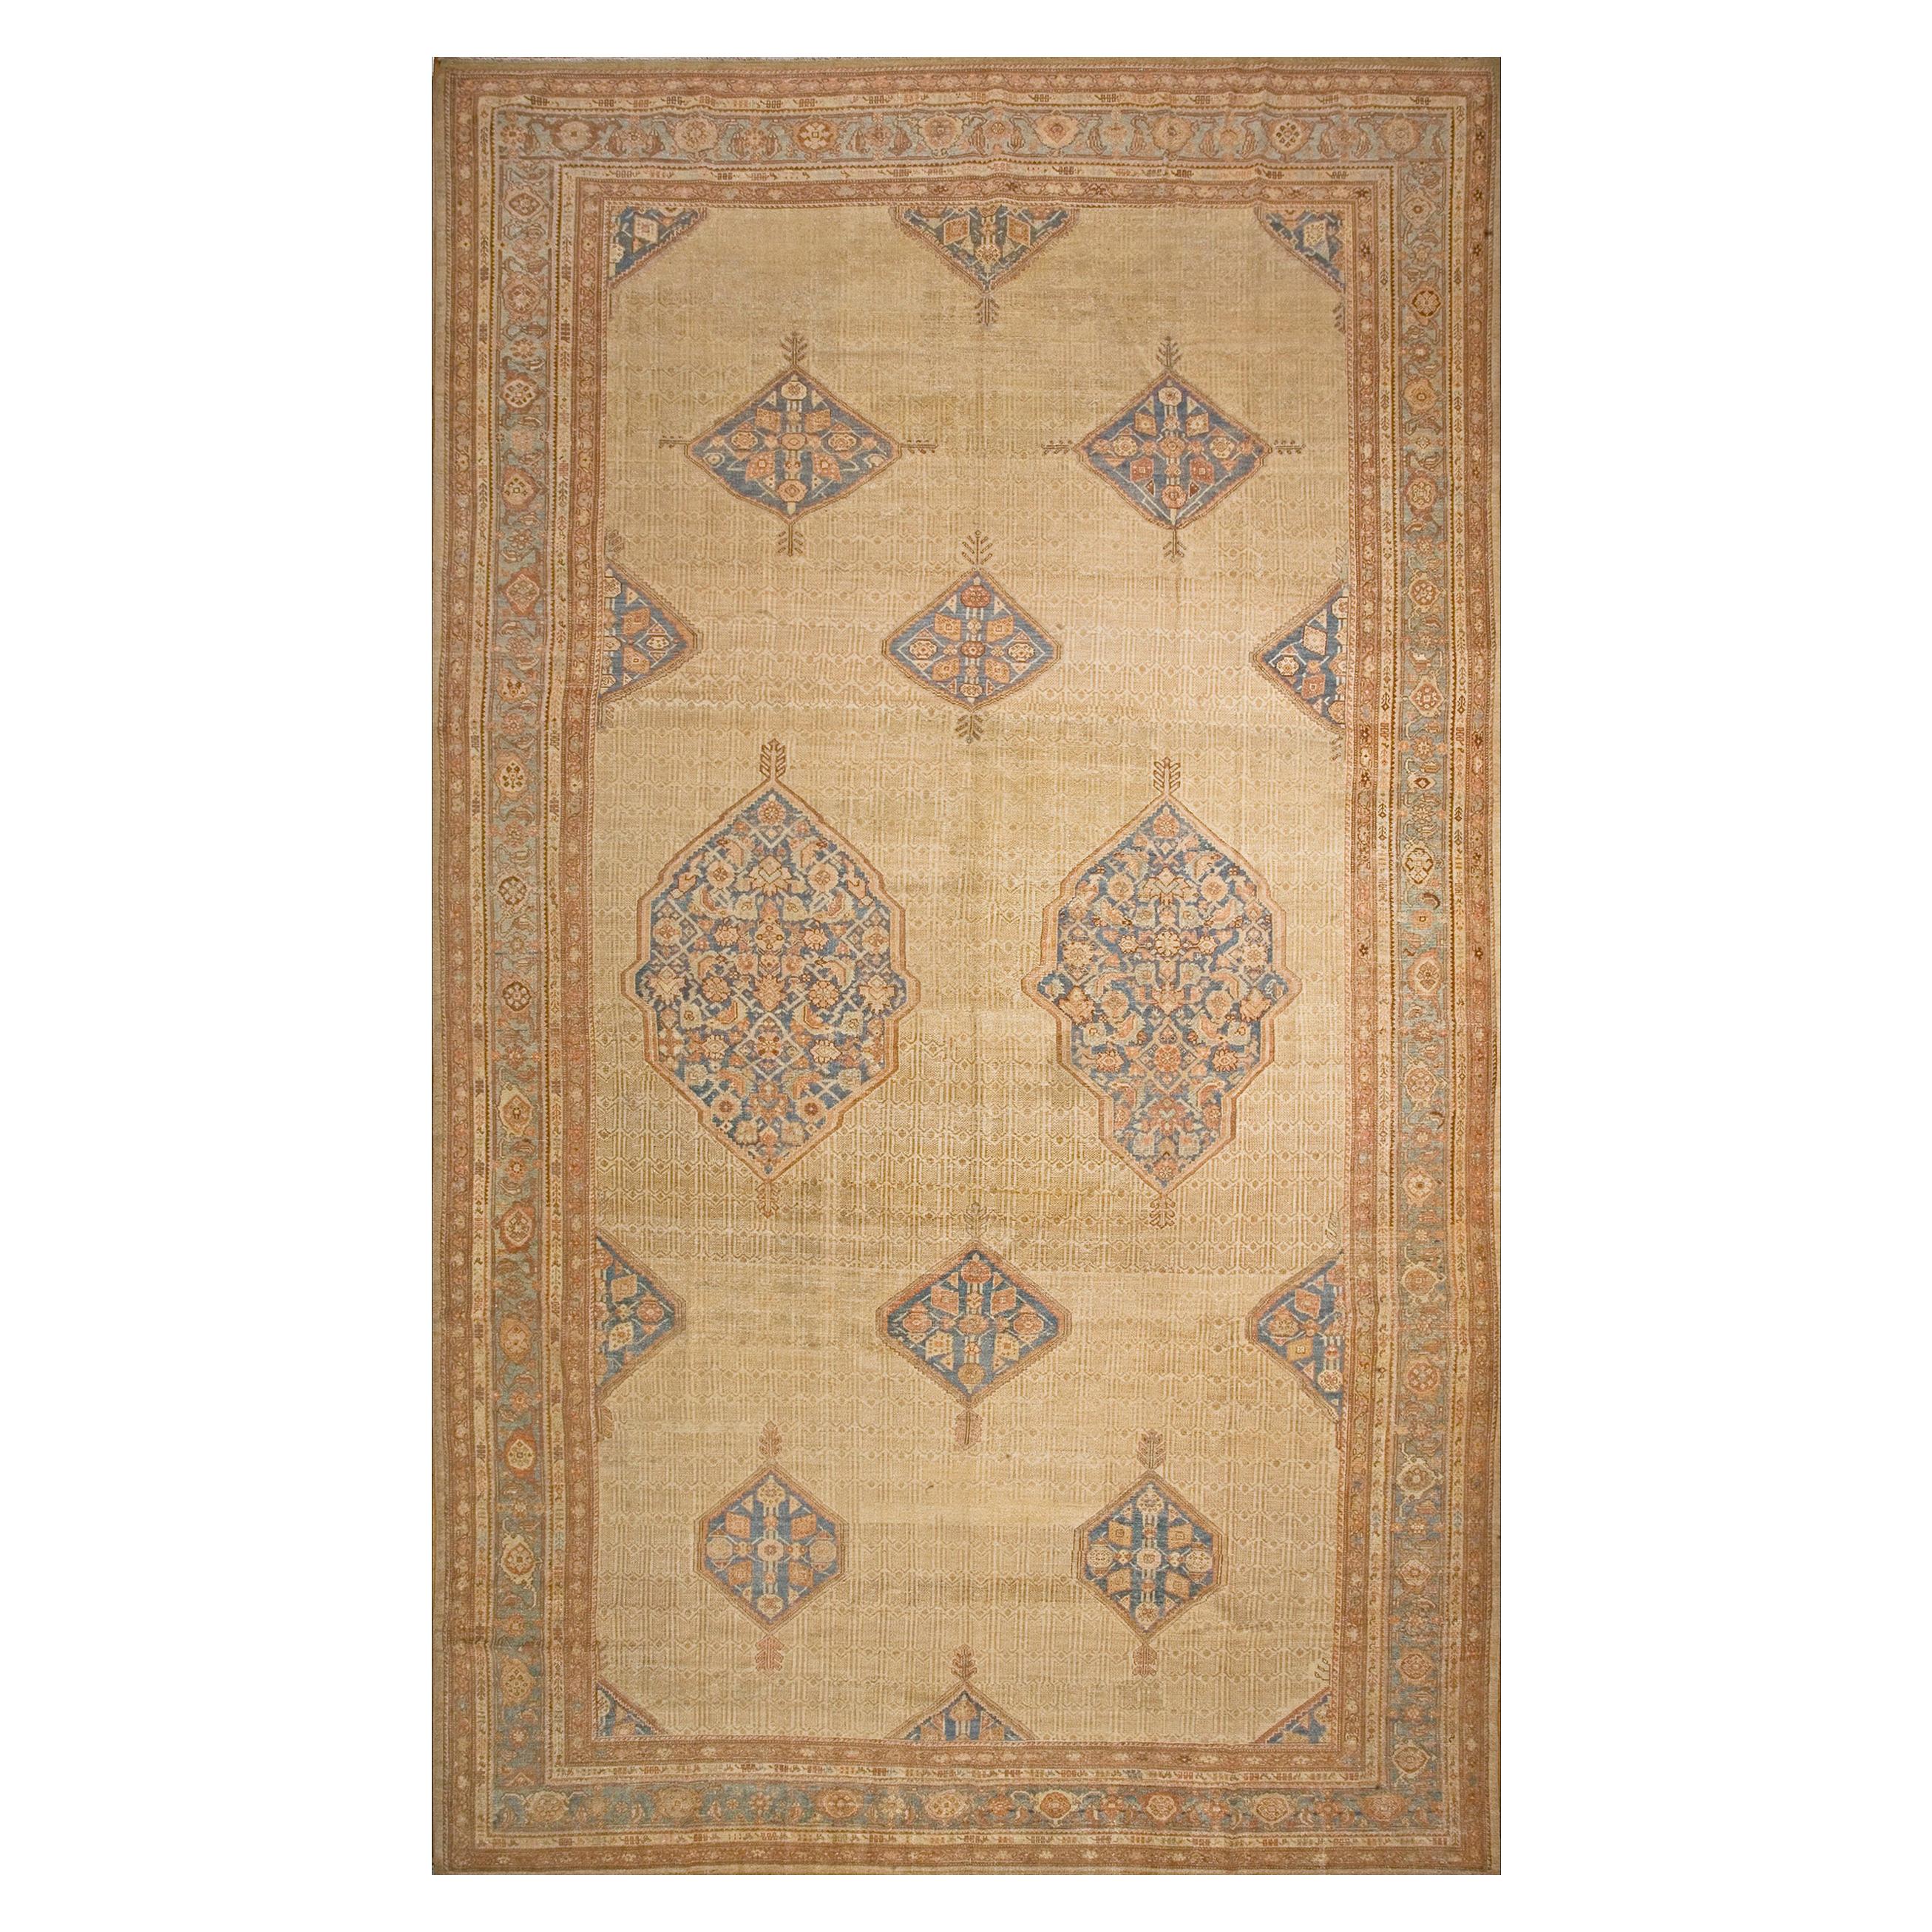 Late 19th Century Persian Serab Carpet ( 11'6" x 18'9" - 351 x 572 ) For Sale